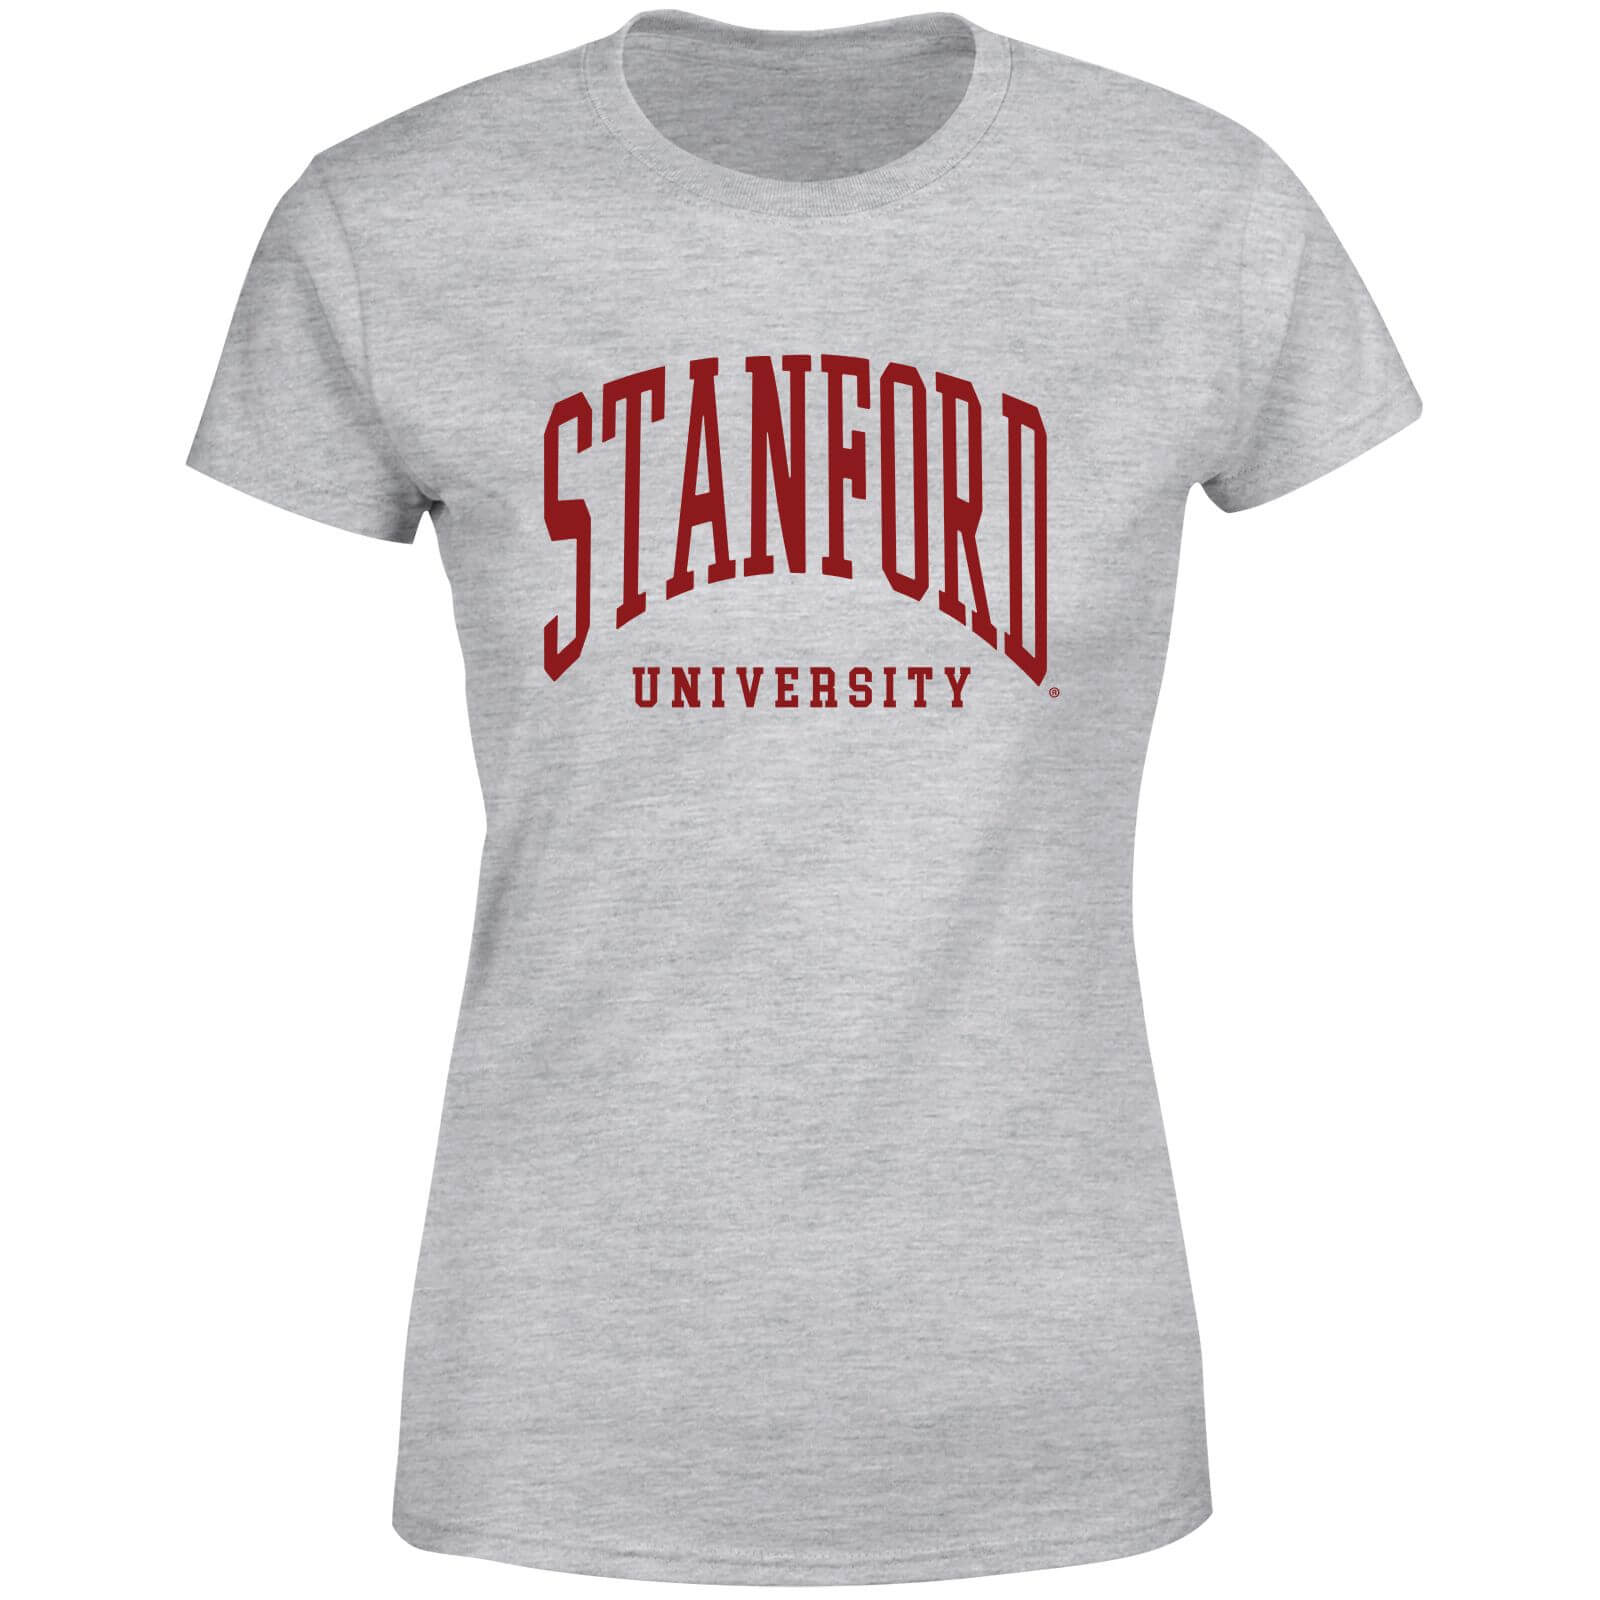 Stanford Gray Tee Women's T-Shirt - Grey - XS